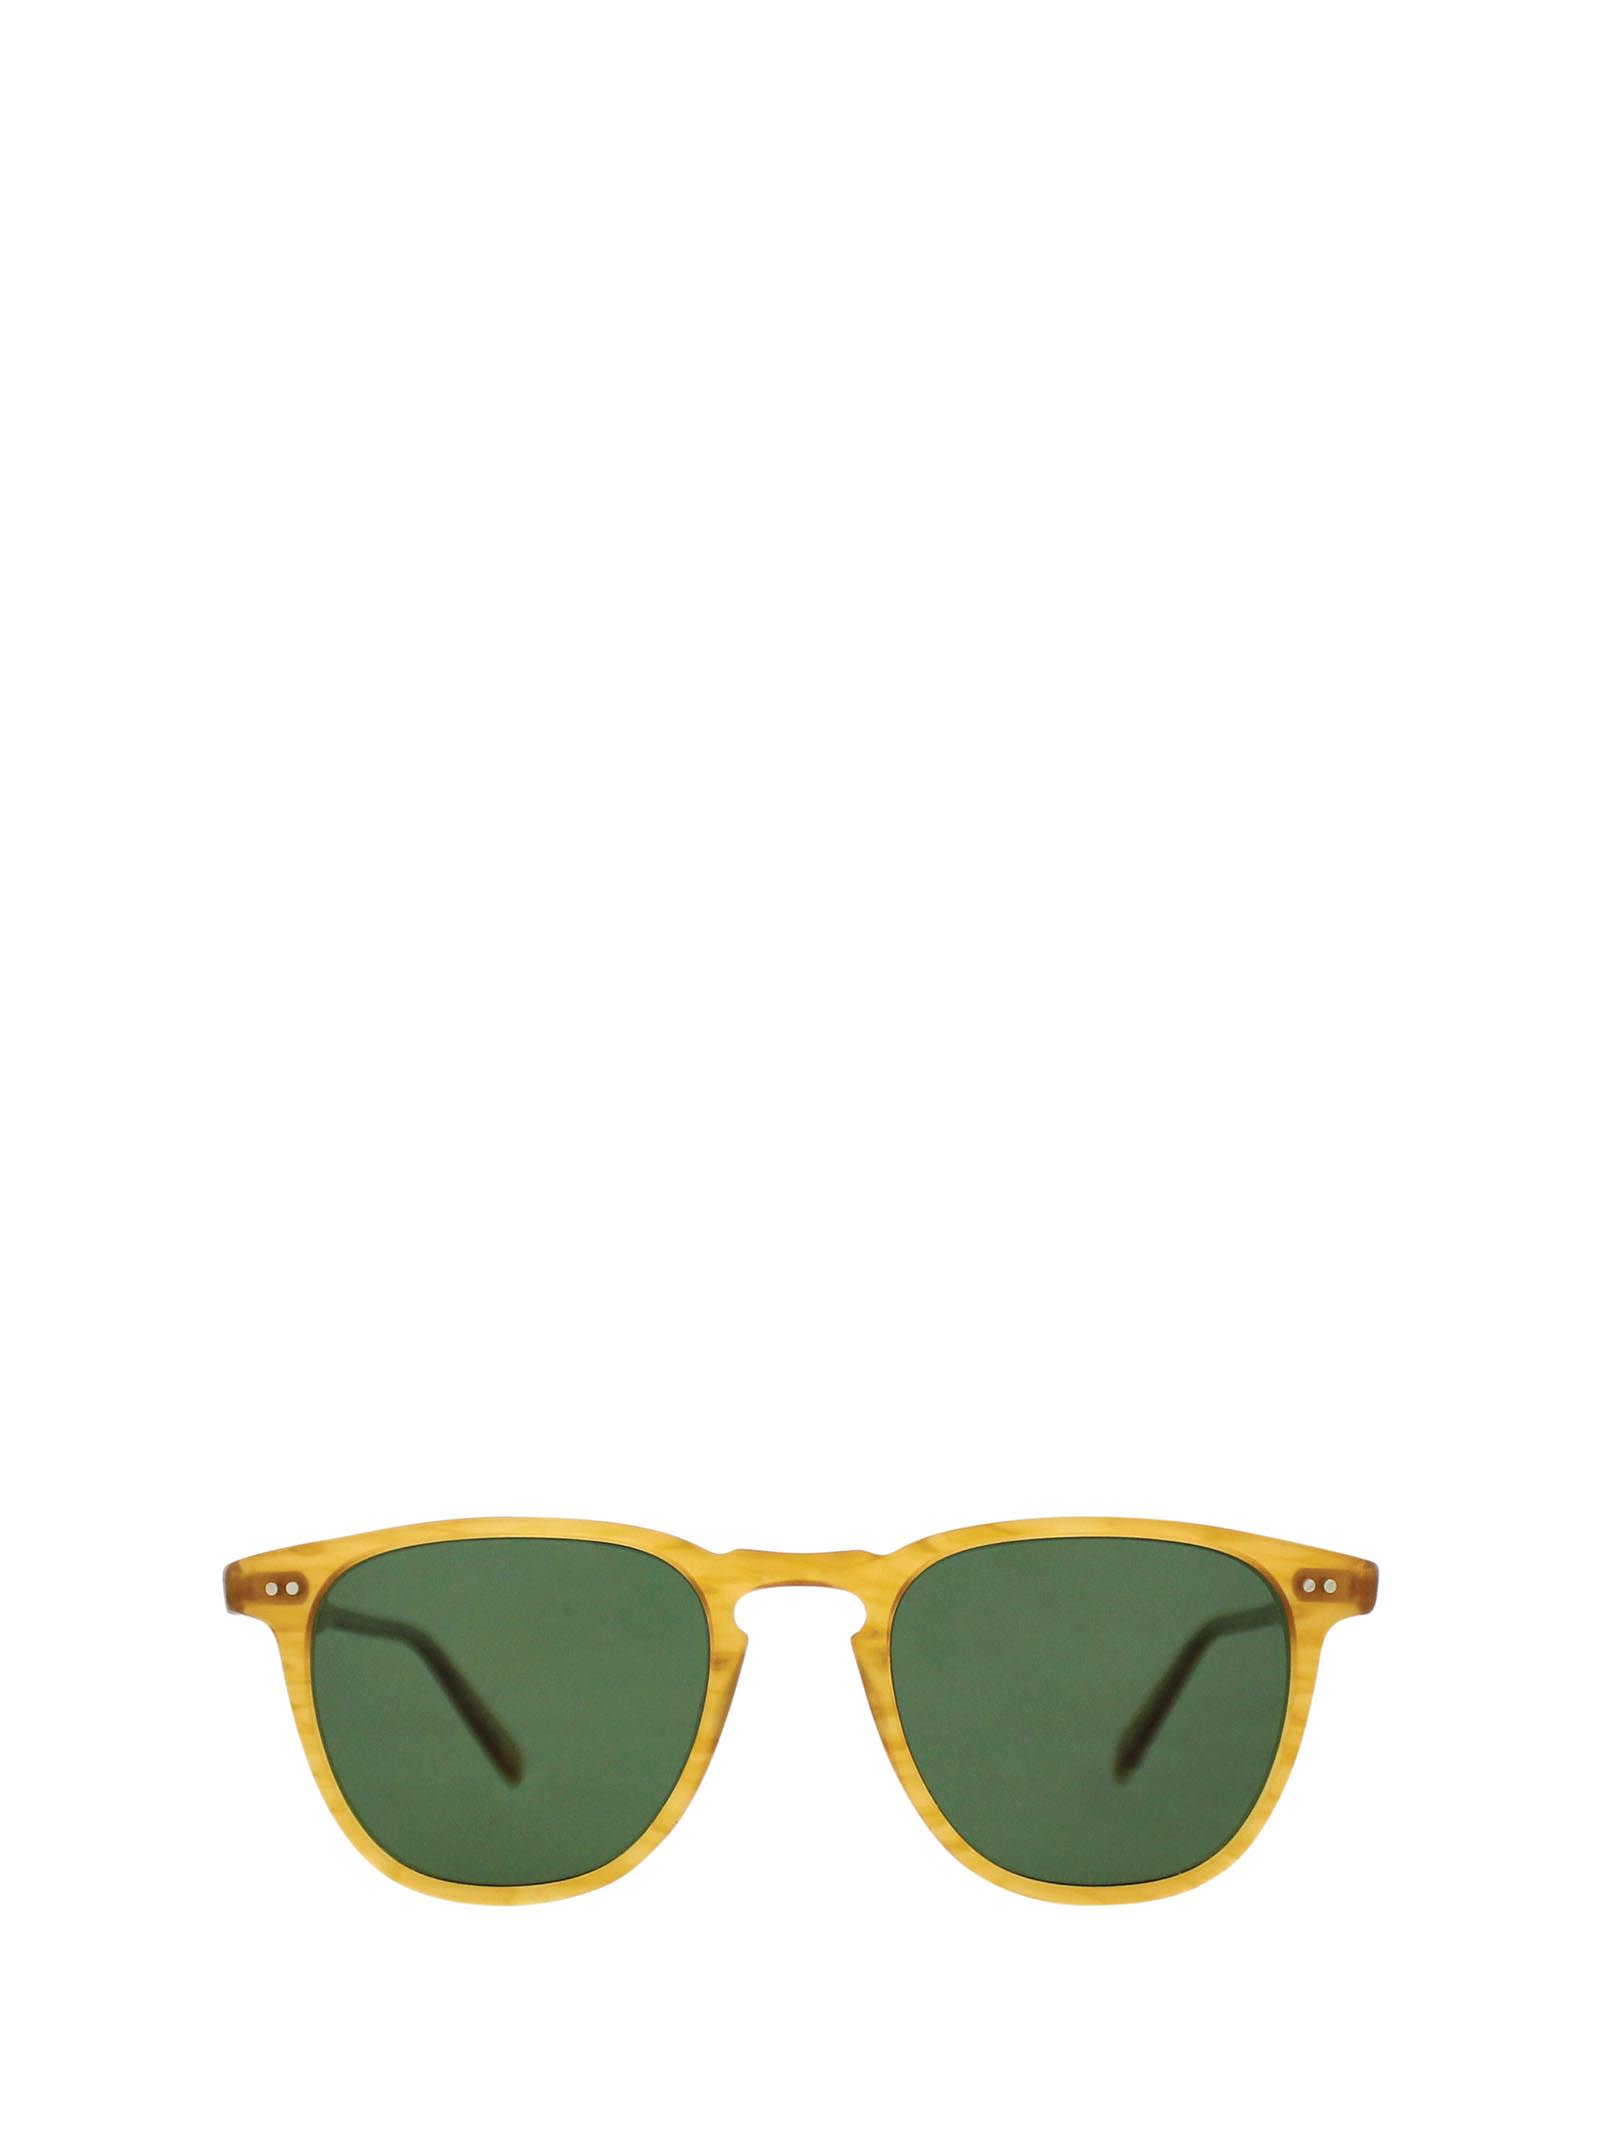 Brooks Sun Butterscotch Sunglasses